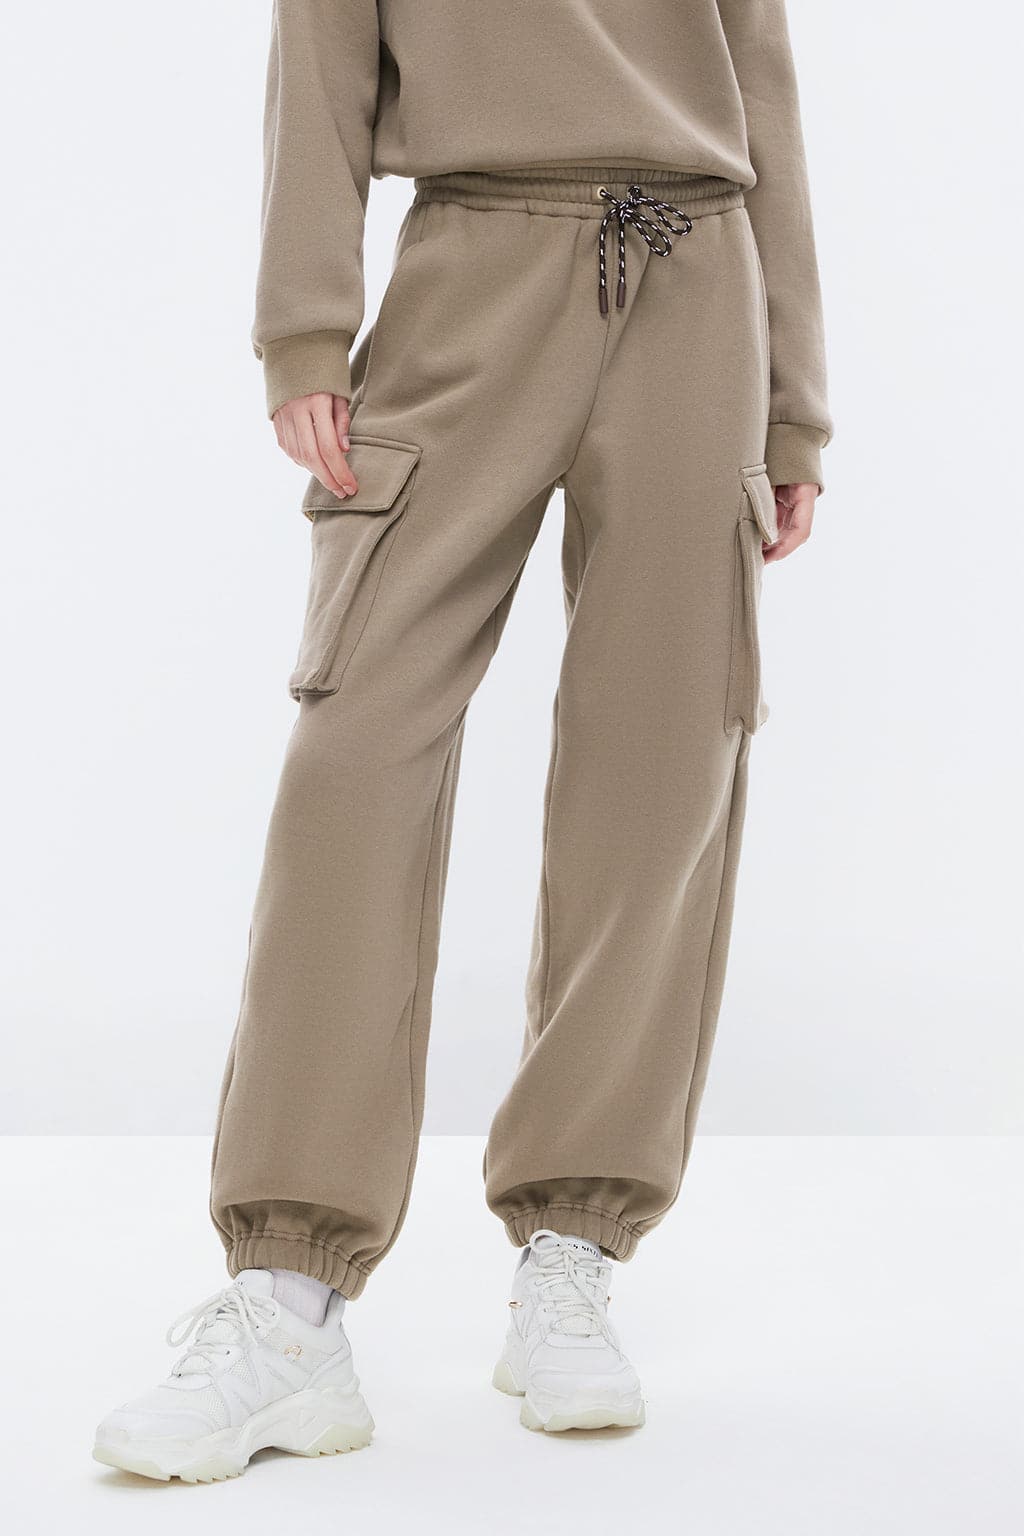 Old Navy Active Cozy Core Leggings High Rise Go Dry Cargo Pants Womans 4X  JJ2131